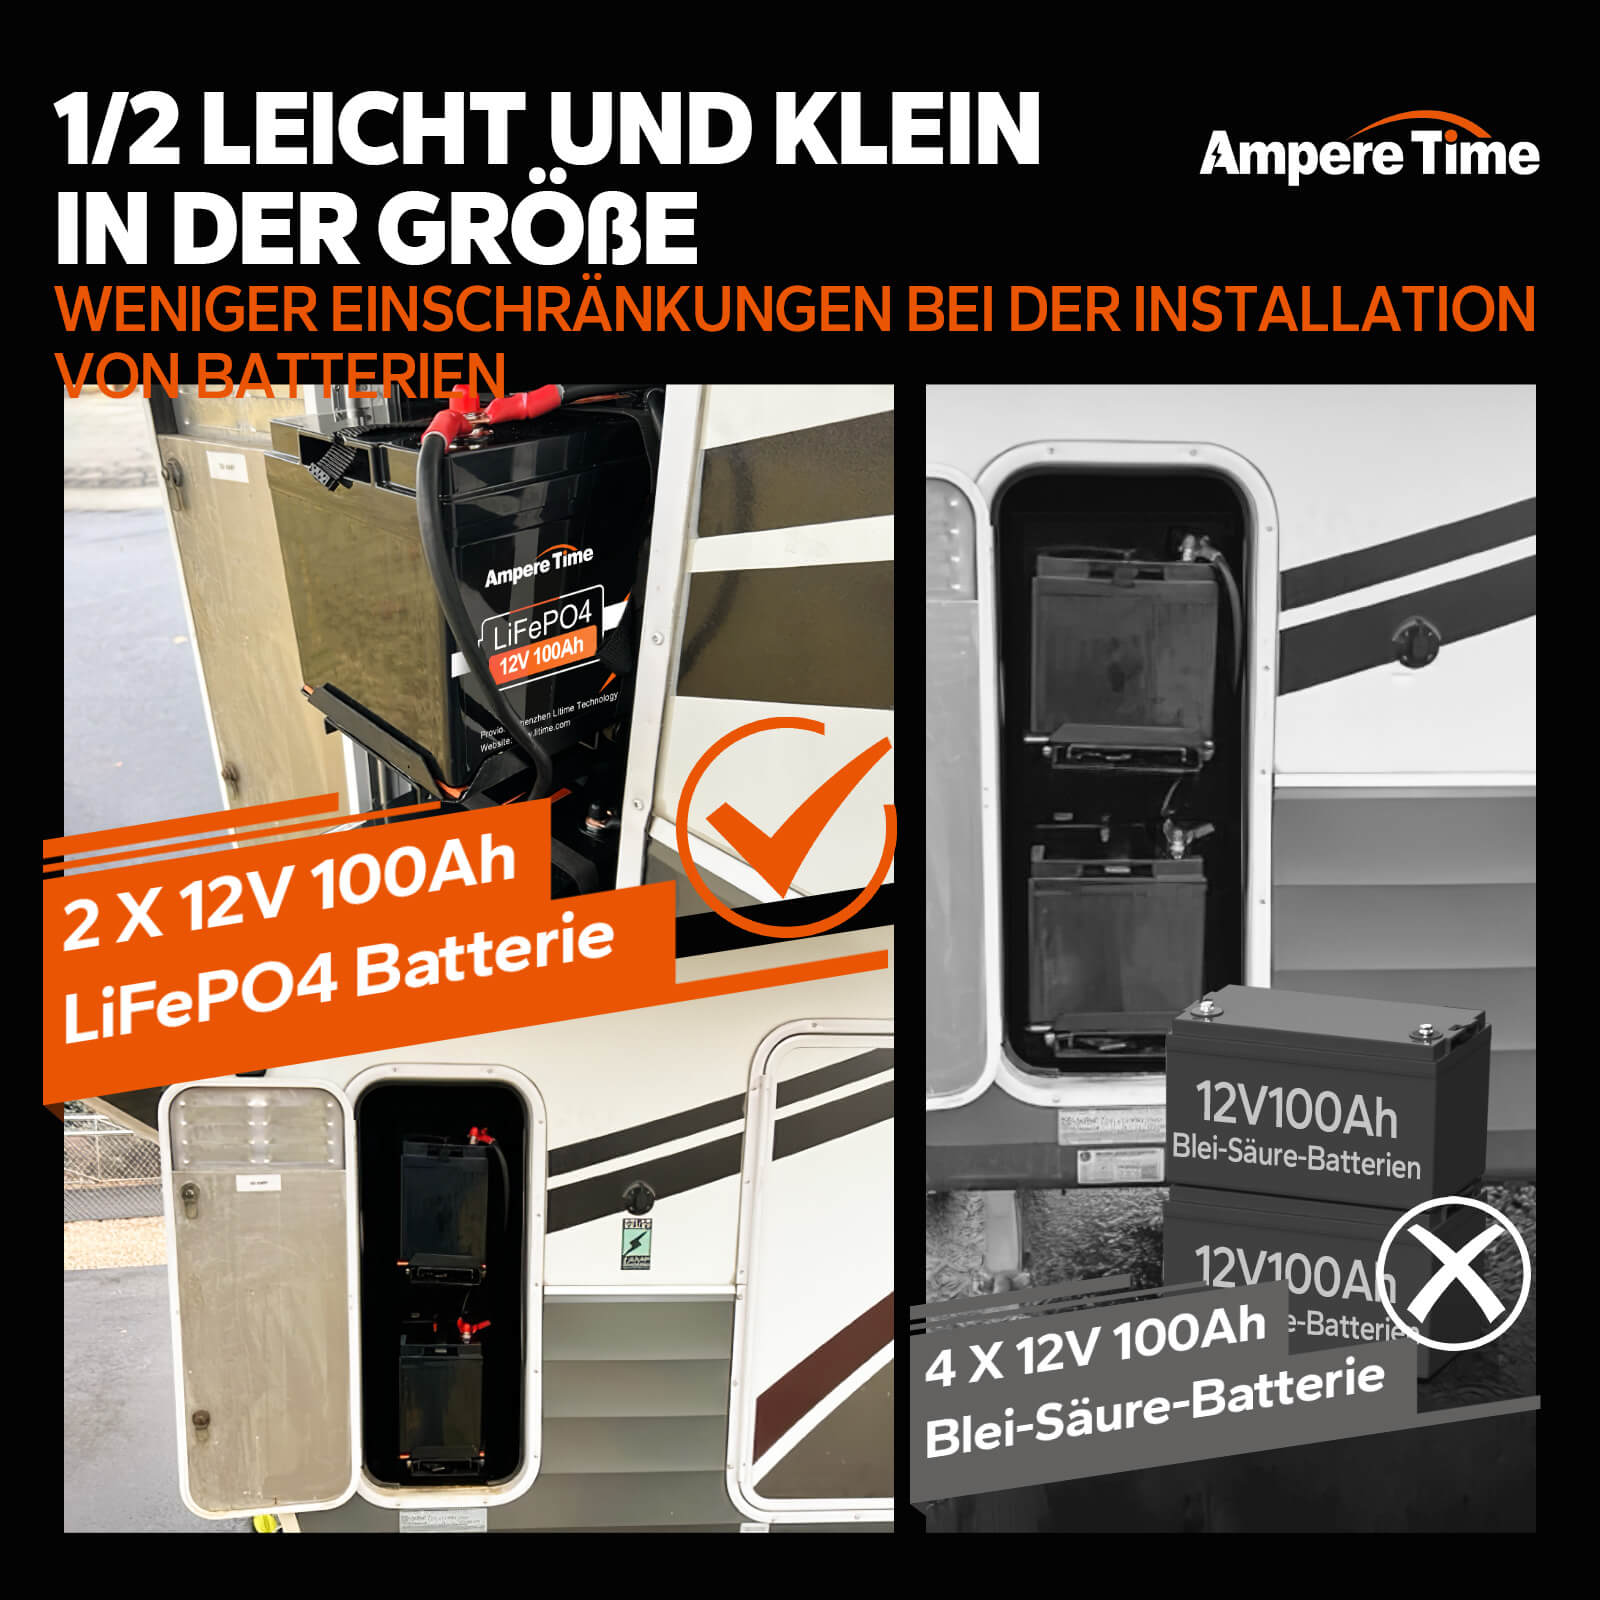 Ampere Time 12V 100Ah LiFePO4 Lithium Batterie, Perfekter Ersatz für die agm batterie Amperetime DE